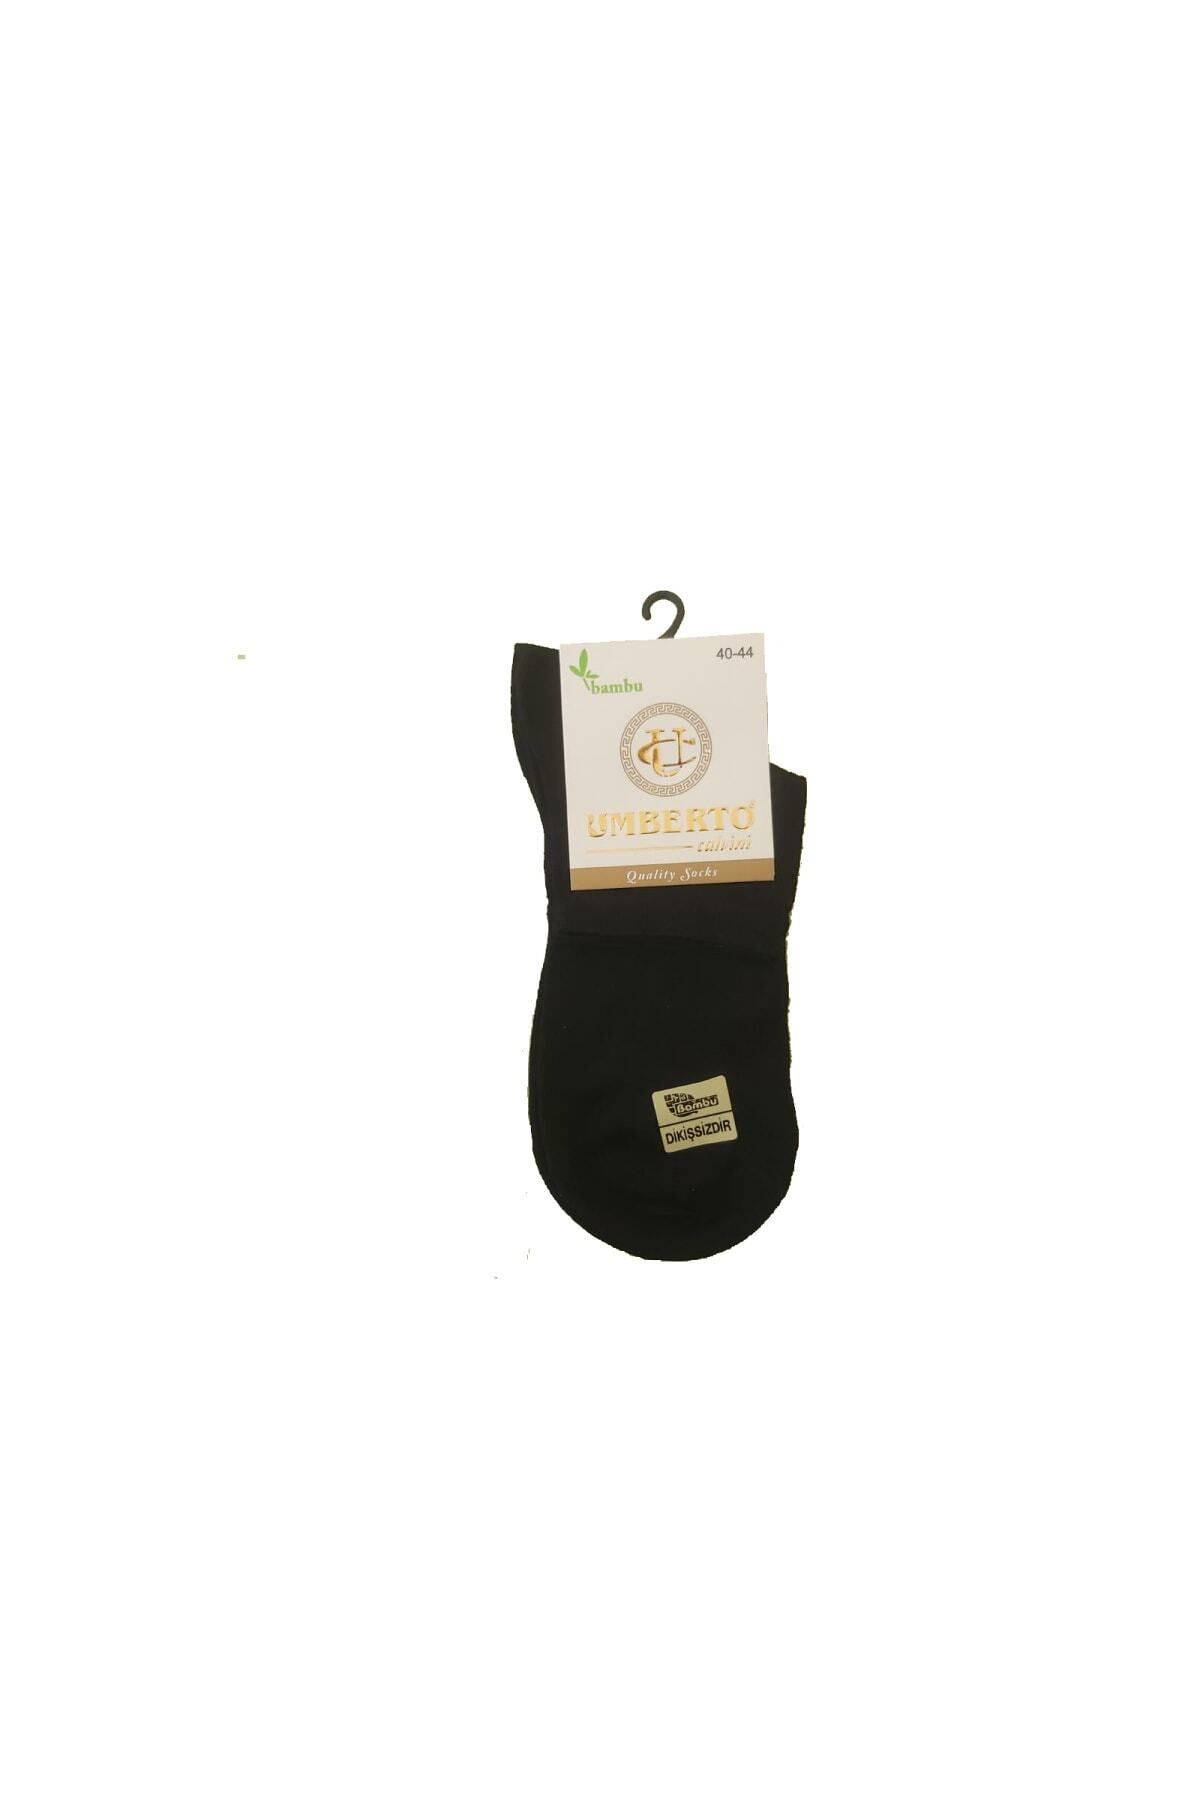 Umberto 3 Çift Siyah Renk Dikişsiz Yarım Konç Bambu Çorap